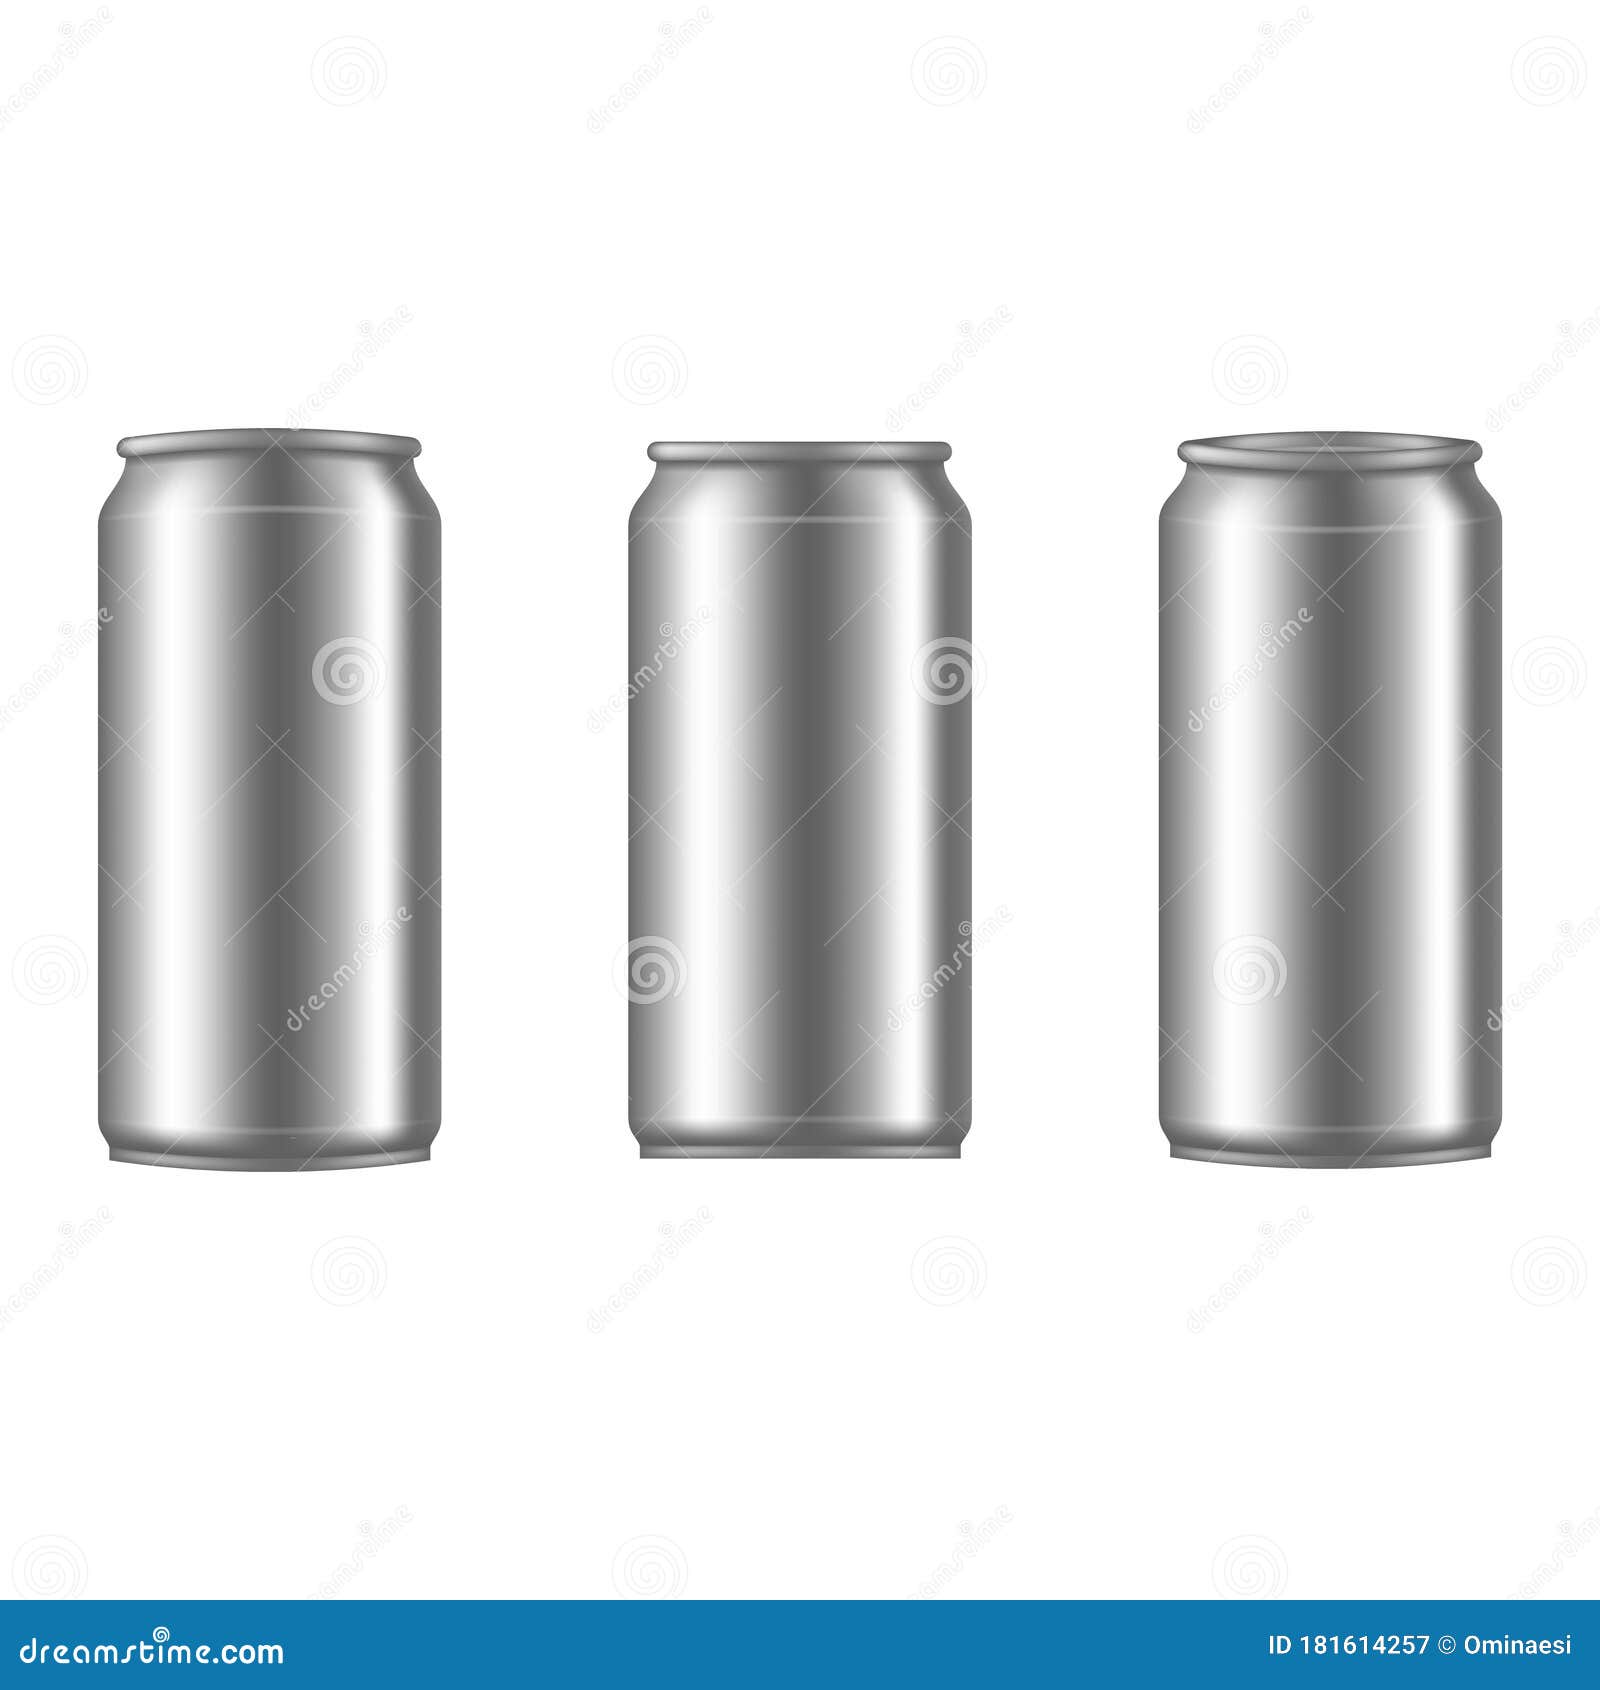 Download Metallic Packaging Cans Beer Soda Water Juice Drink Mockup Realistic Vector Illustration Stock ...